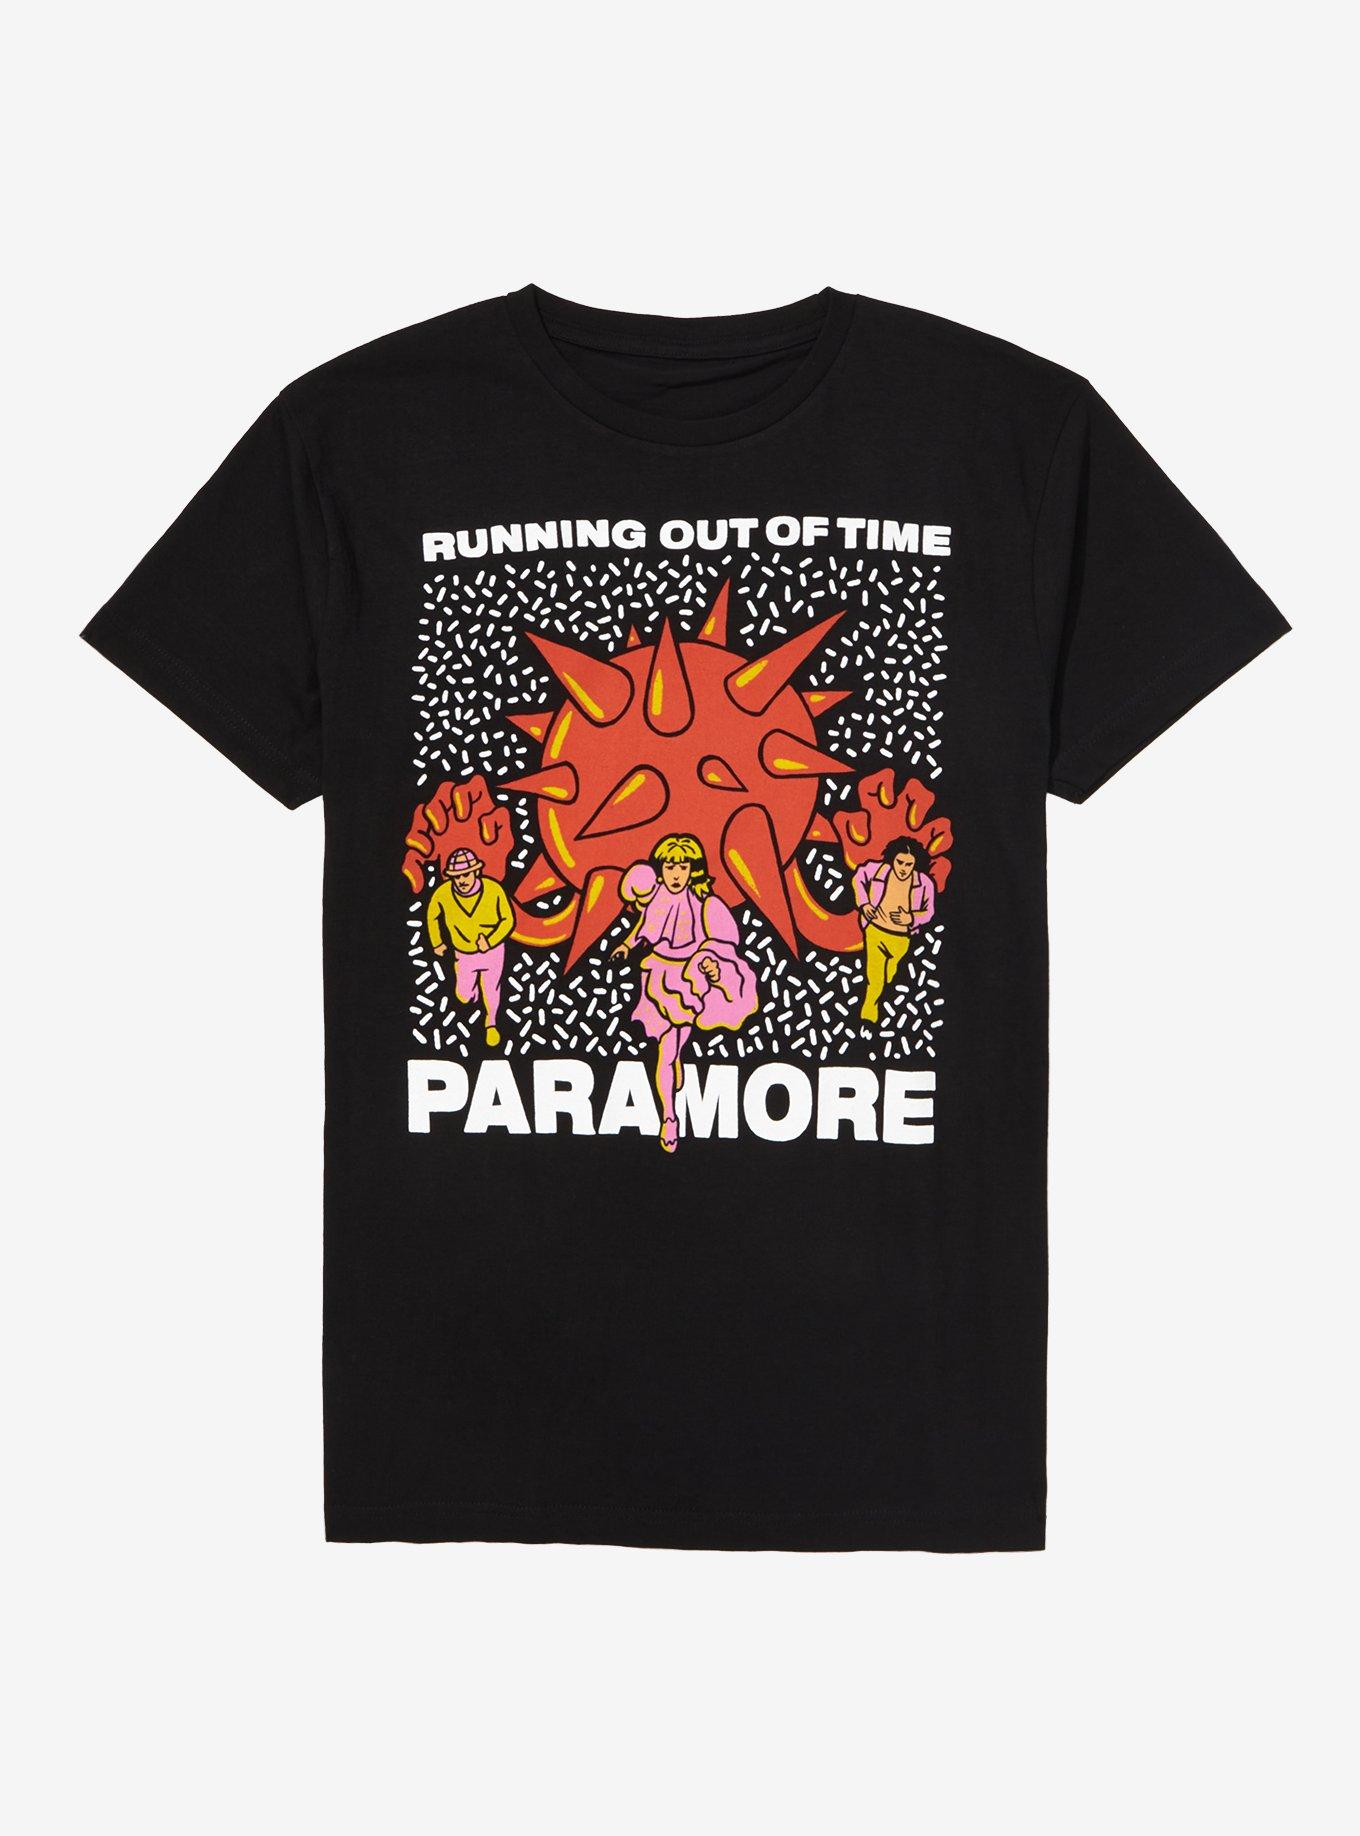 Band New Eyes Paramore Shirt, This Is Why Tour 2023 shirt, Paramore